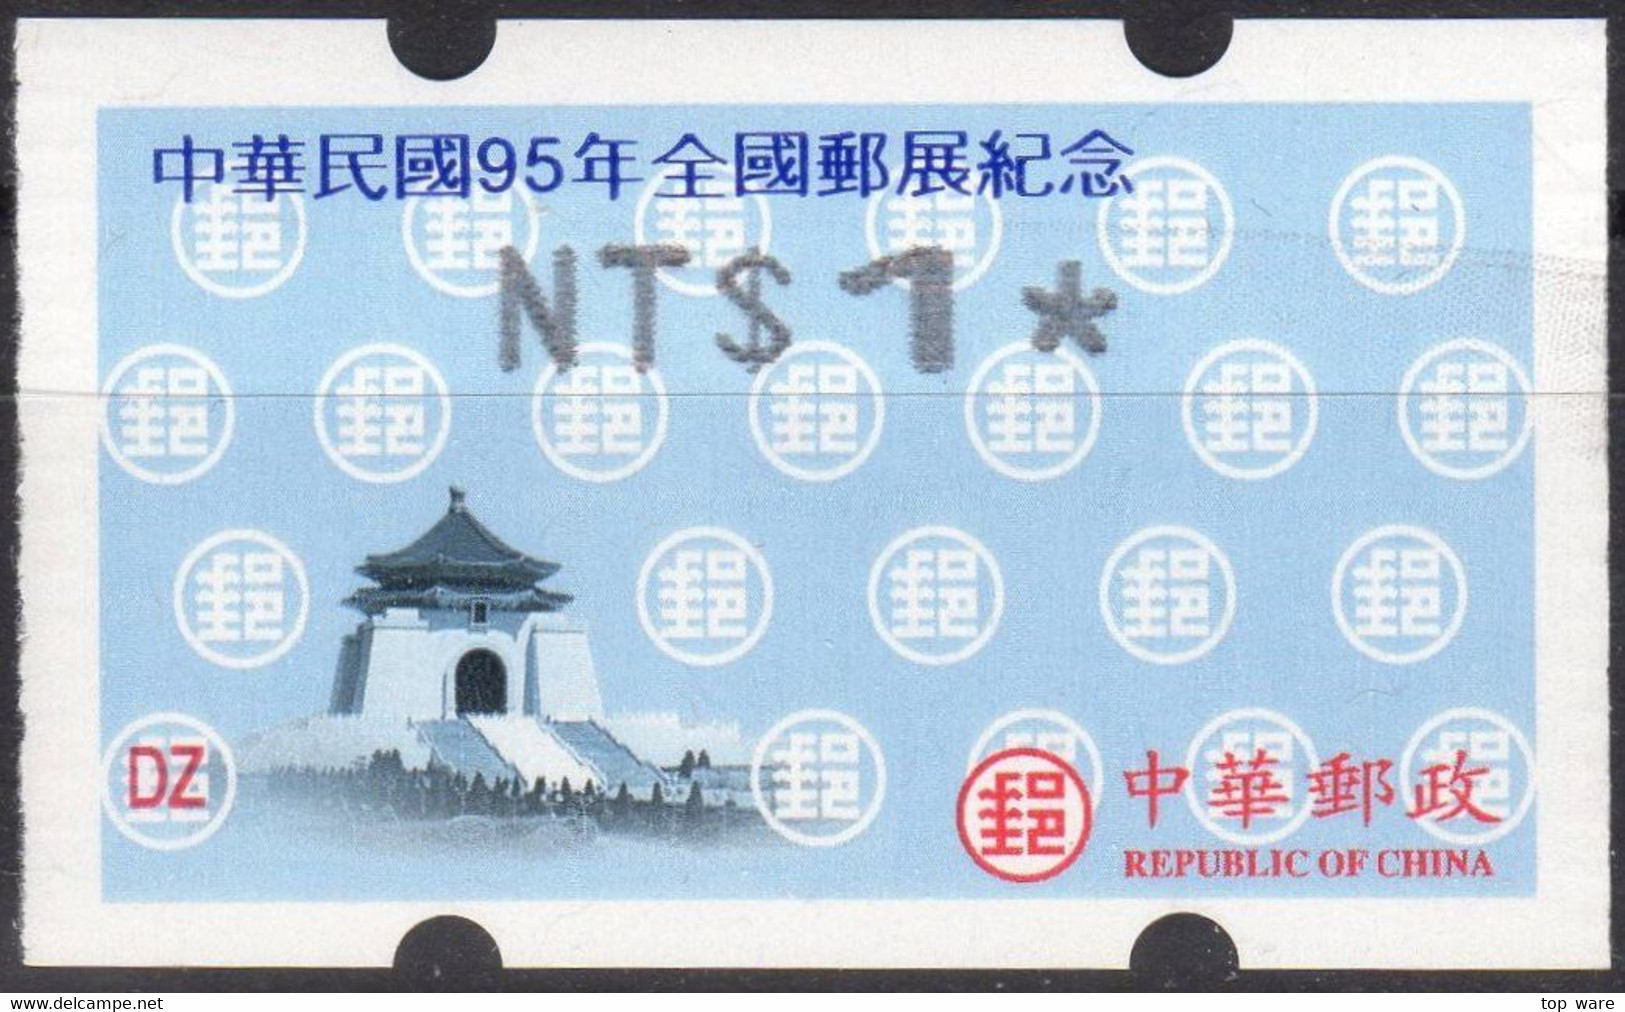 2006 Automatenmarken China Taiwan ROCUPEX KINMEN MiNr.13.1 Black ATM NT$1 MNH Nagler Kiosk Automatenmarken - Distributeurs